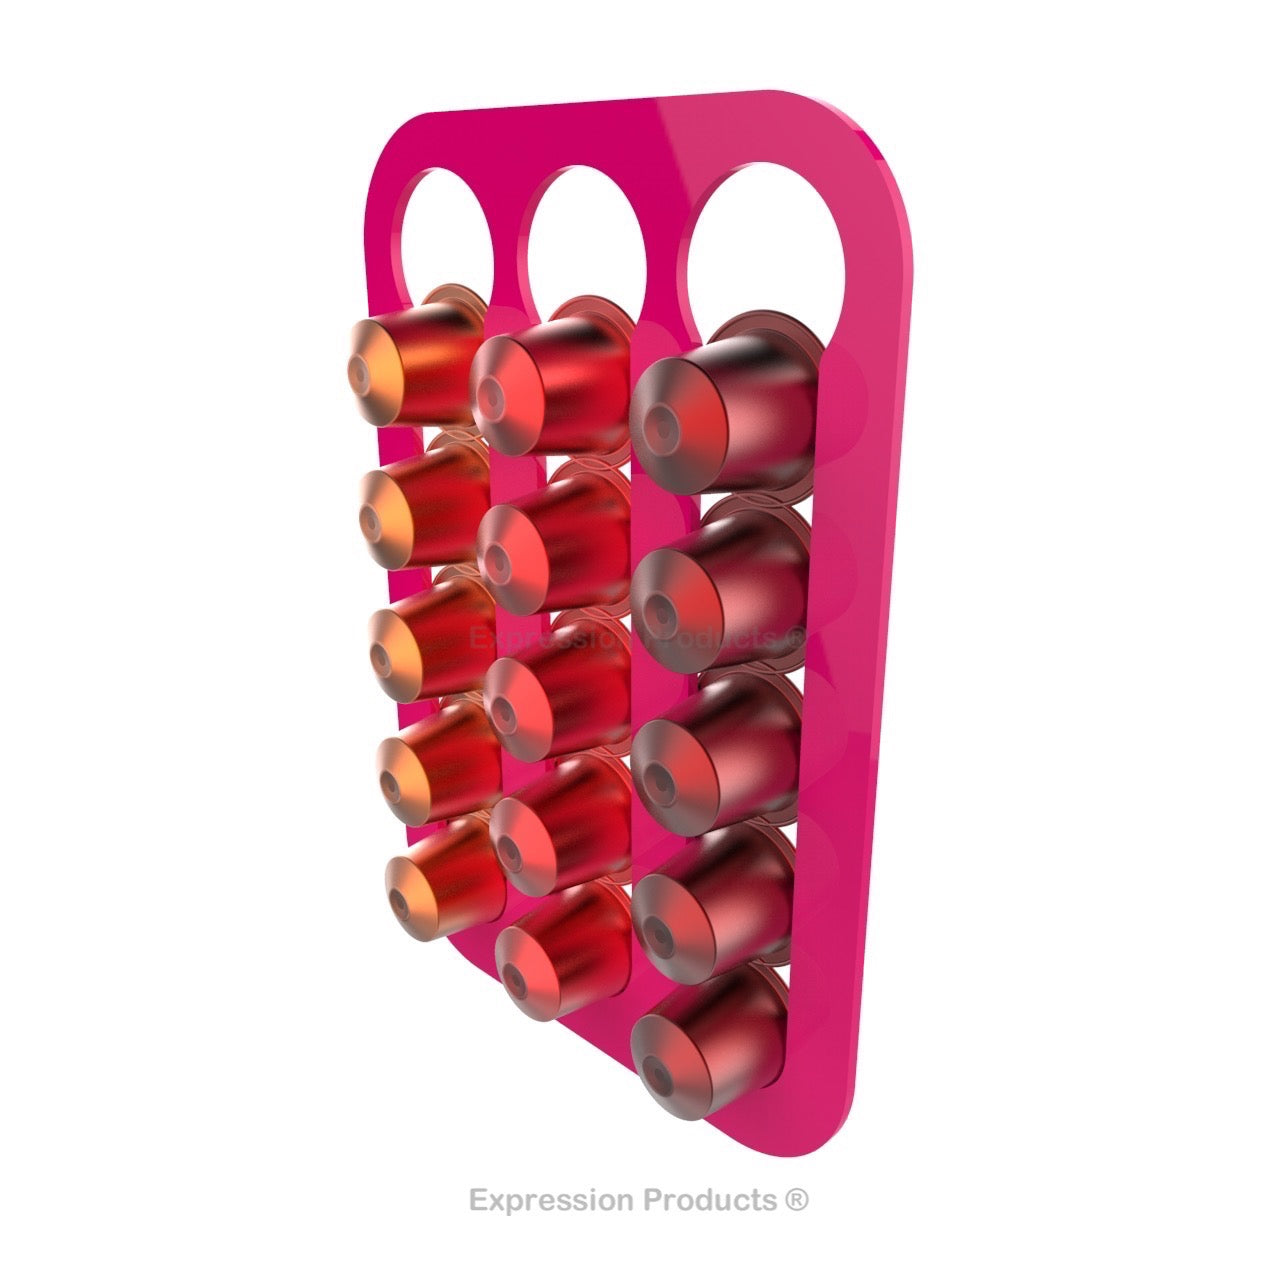 Magnetic Nespresso Original Line coffee pod holder shown in pink holding 15 pods